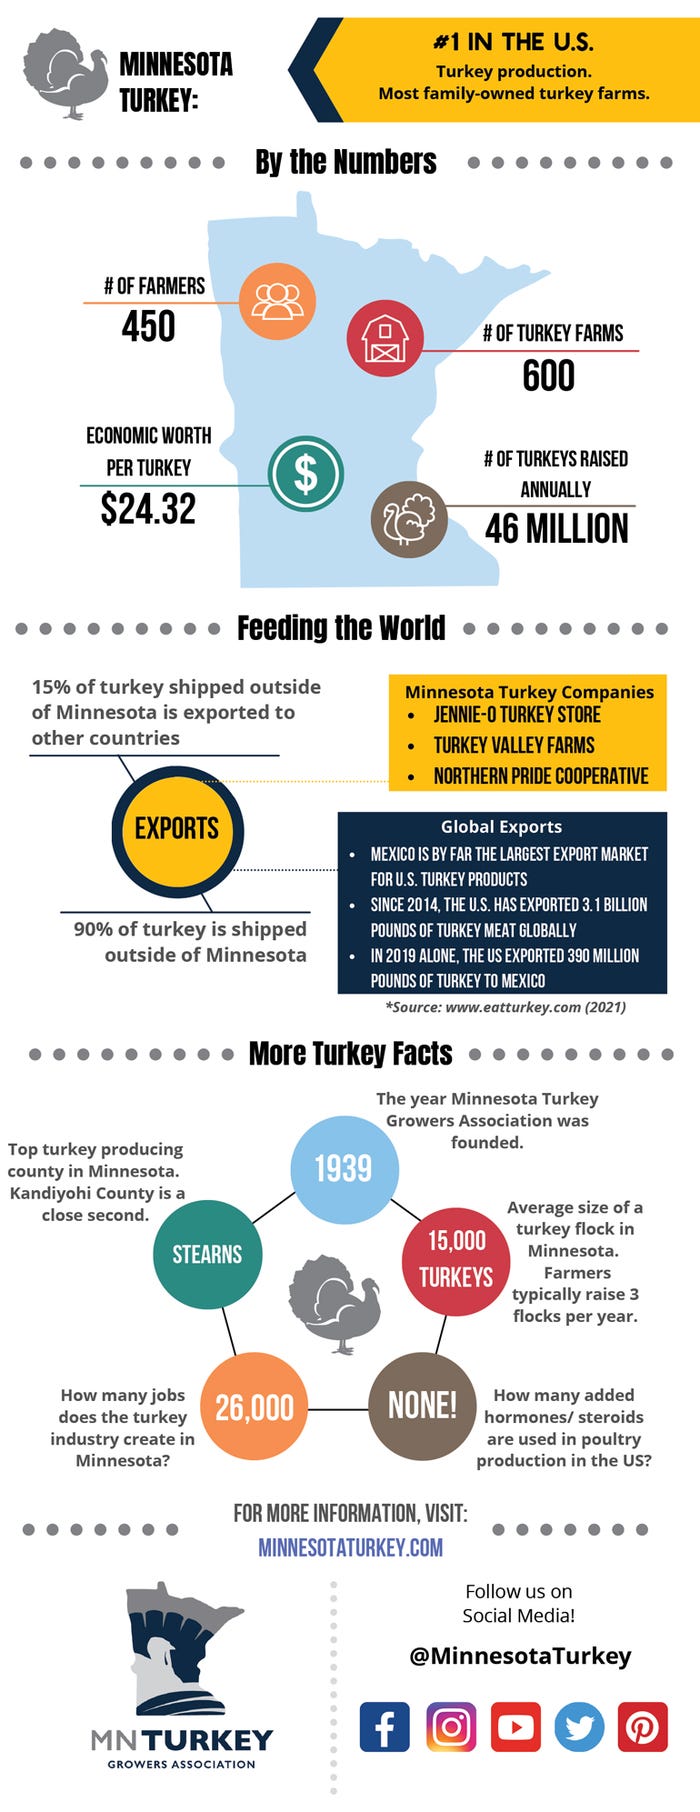 Minnesota turkey industry at a glance